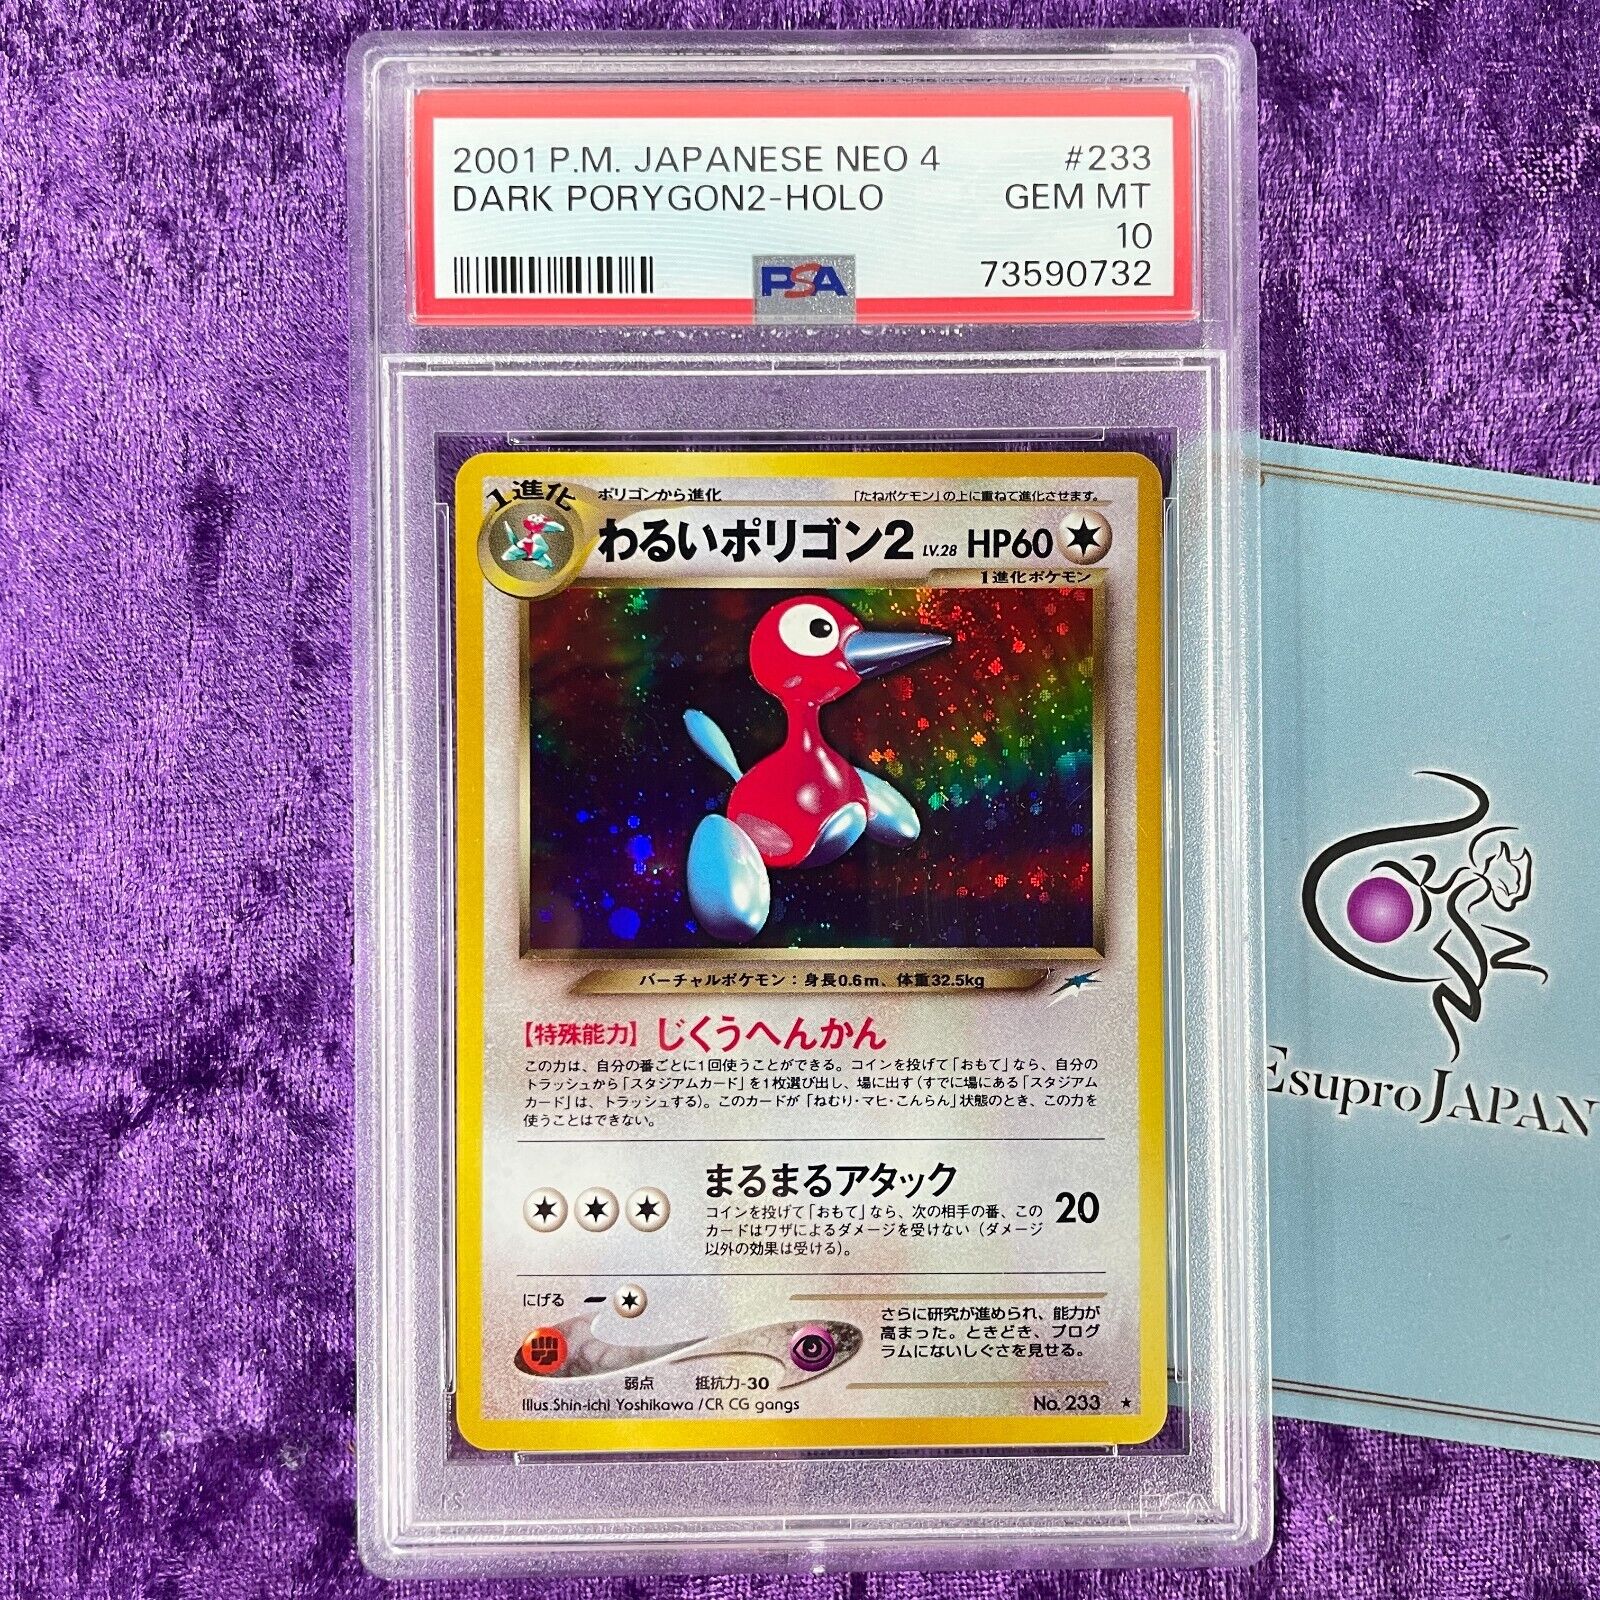 PSA 10 2001 Dark Porygon2 Holo #233 Pokemon Card Japanese NEO 4 Vintage Gem Mint